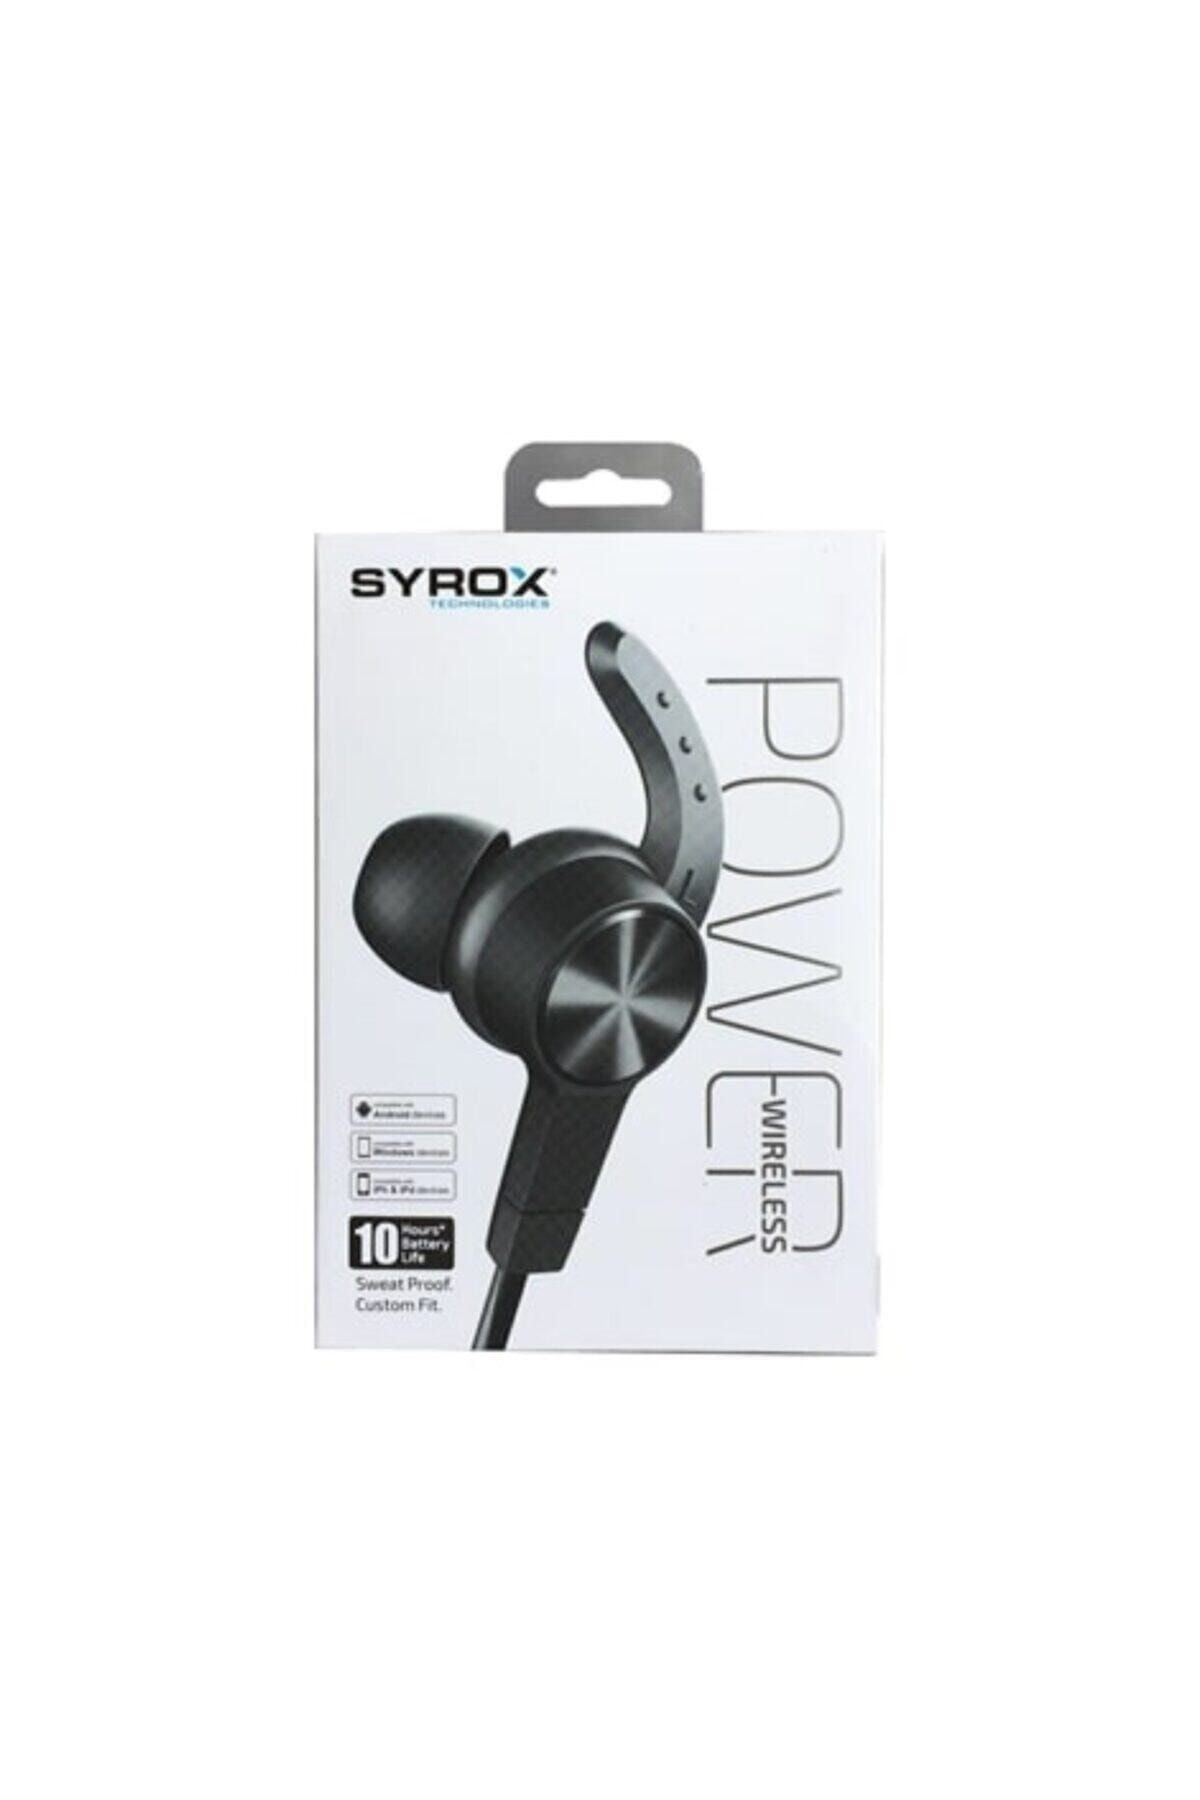 Syrox Bluetooth'lu Mıknatıslı Kulak Içi Spor Kulaklık Çift Bataryalı (Syx-s32) Siyah Renk